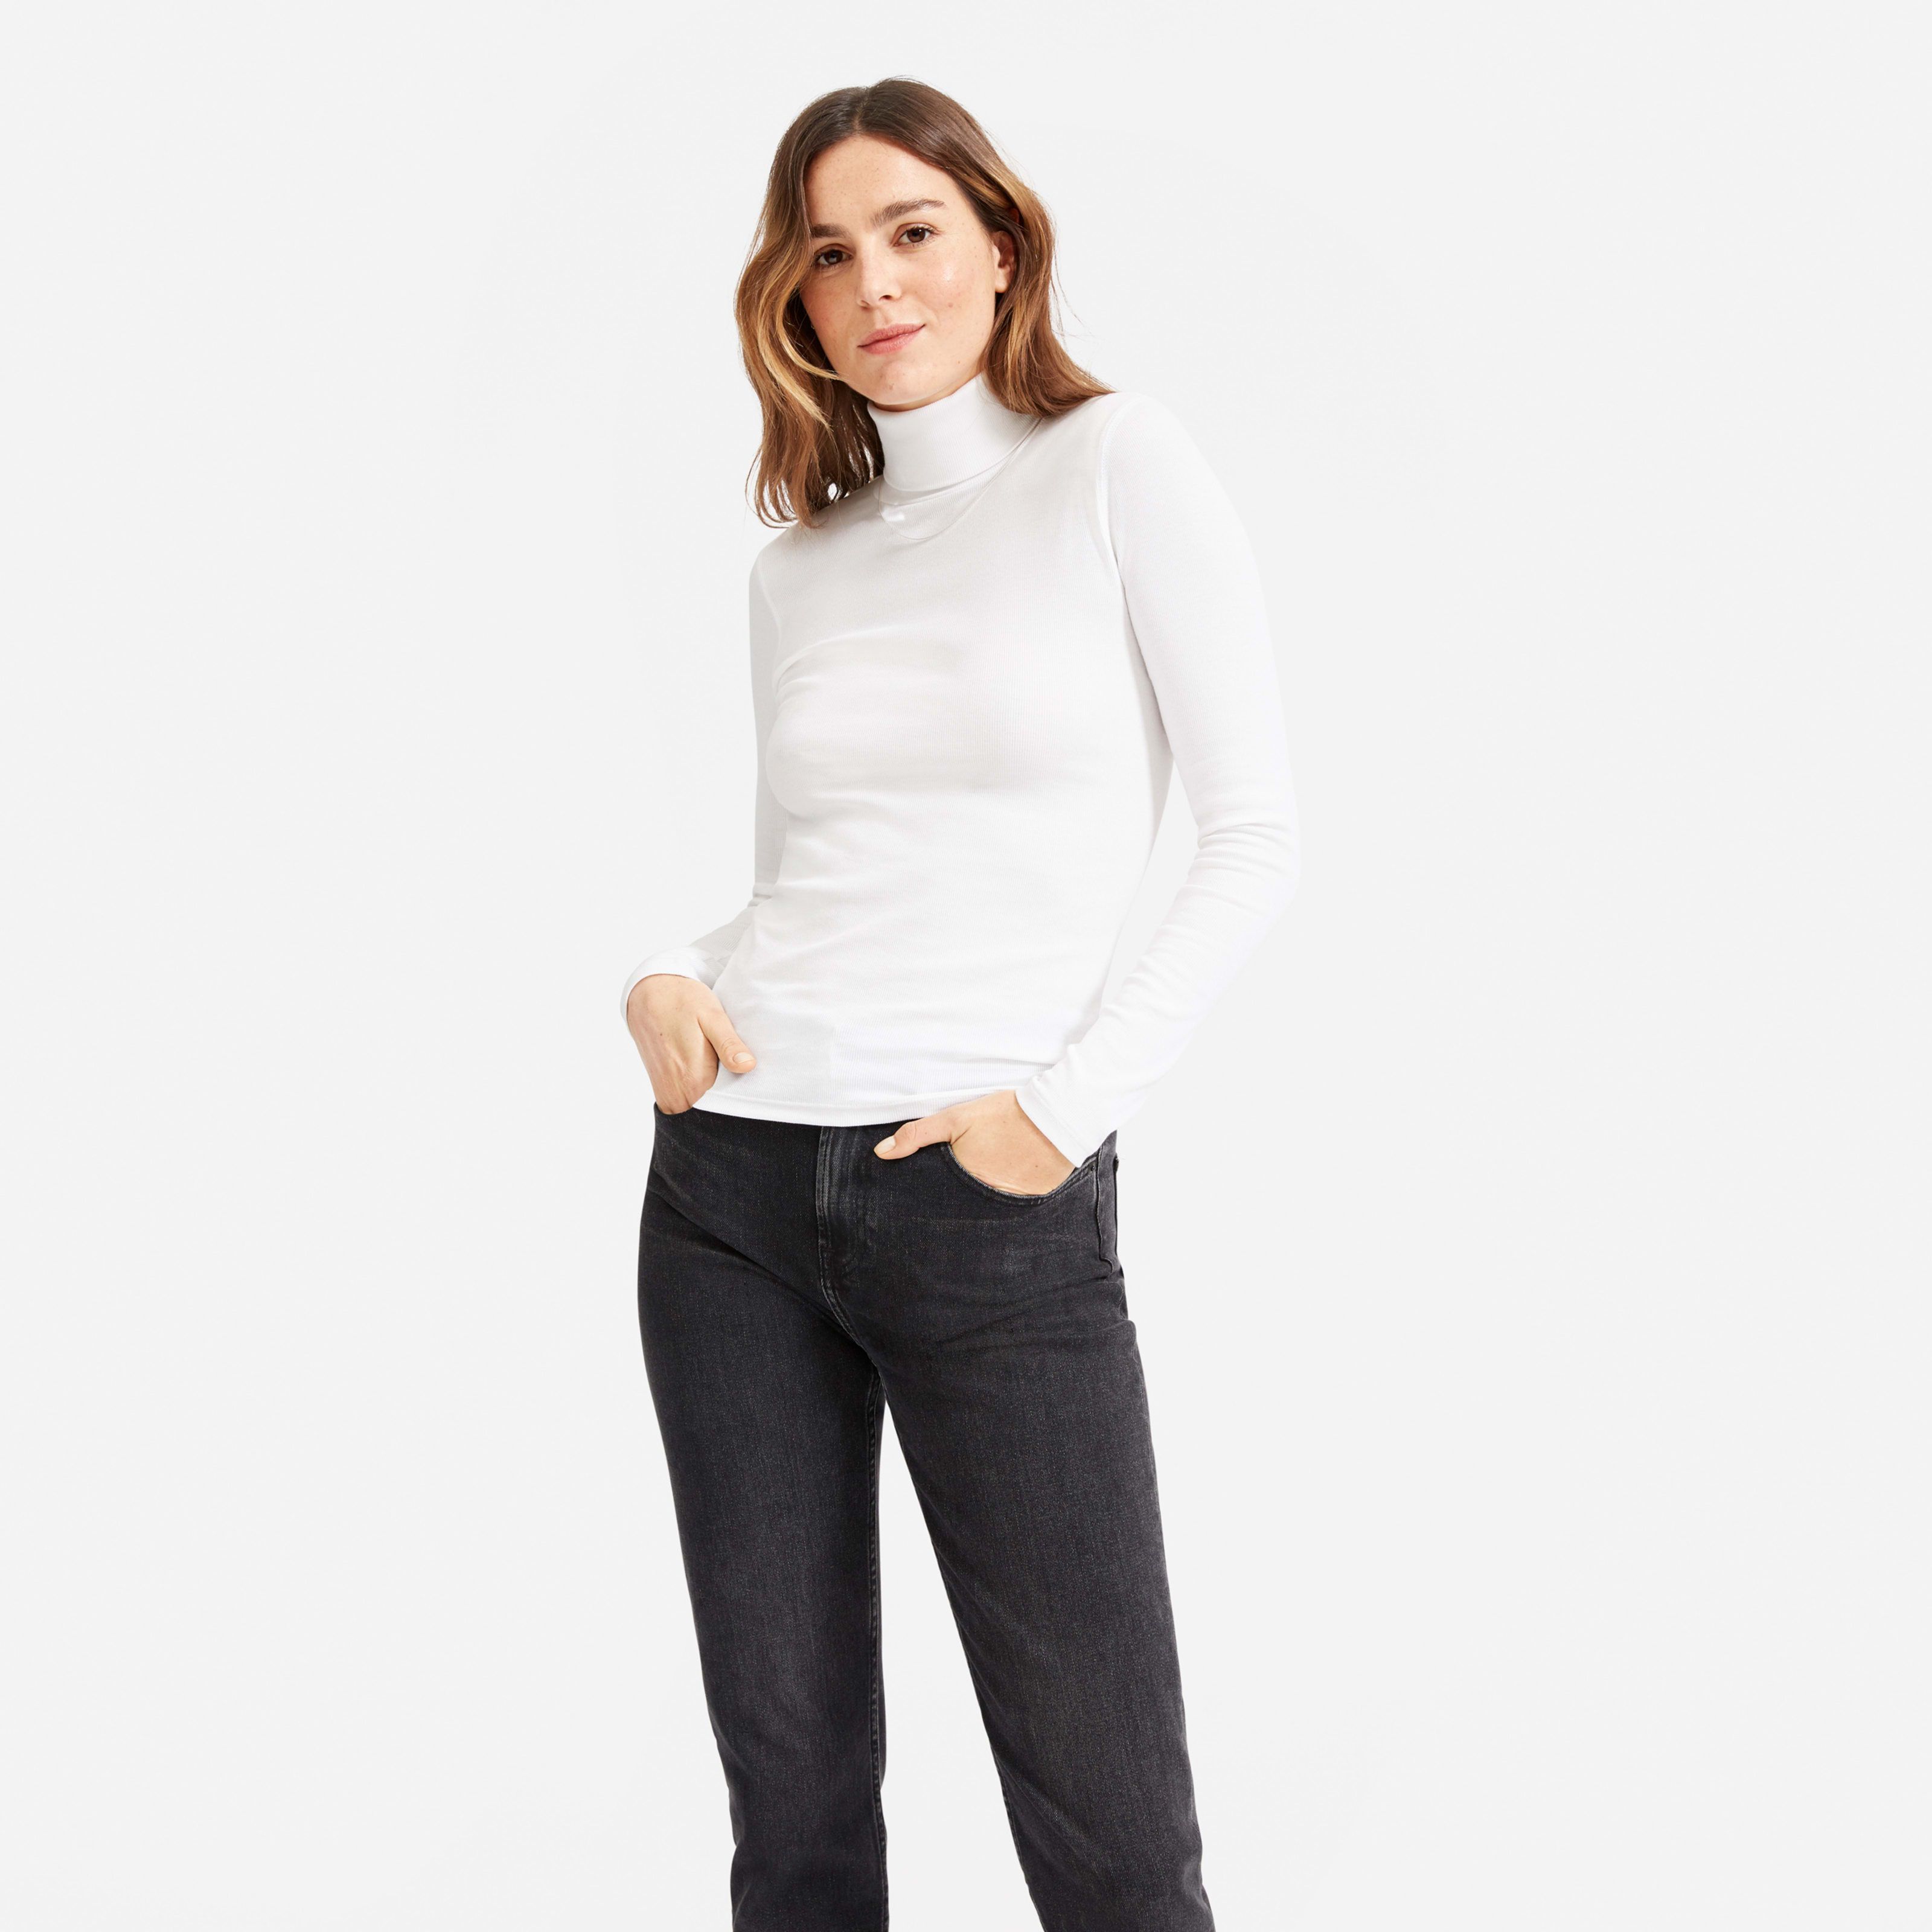 Women's Pima Micro Rib Turtleneck Sweater by Everlane in White, Size M | Everlane